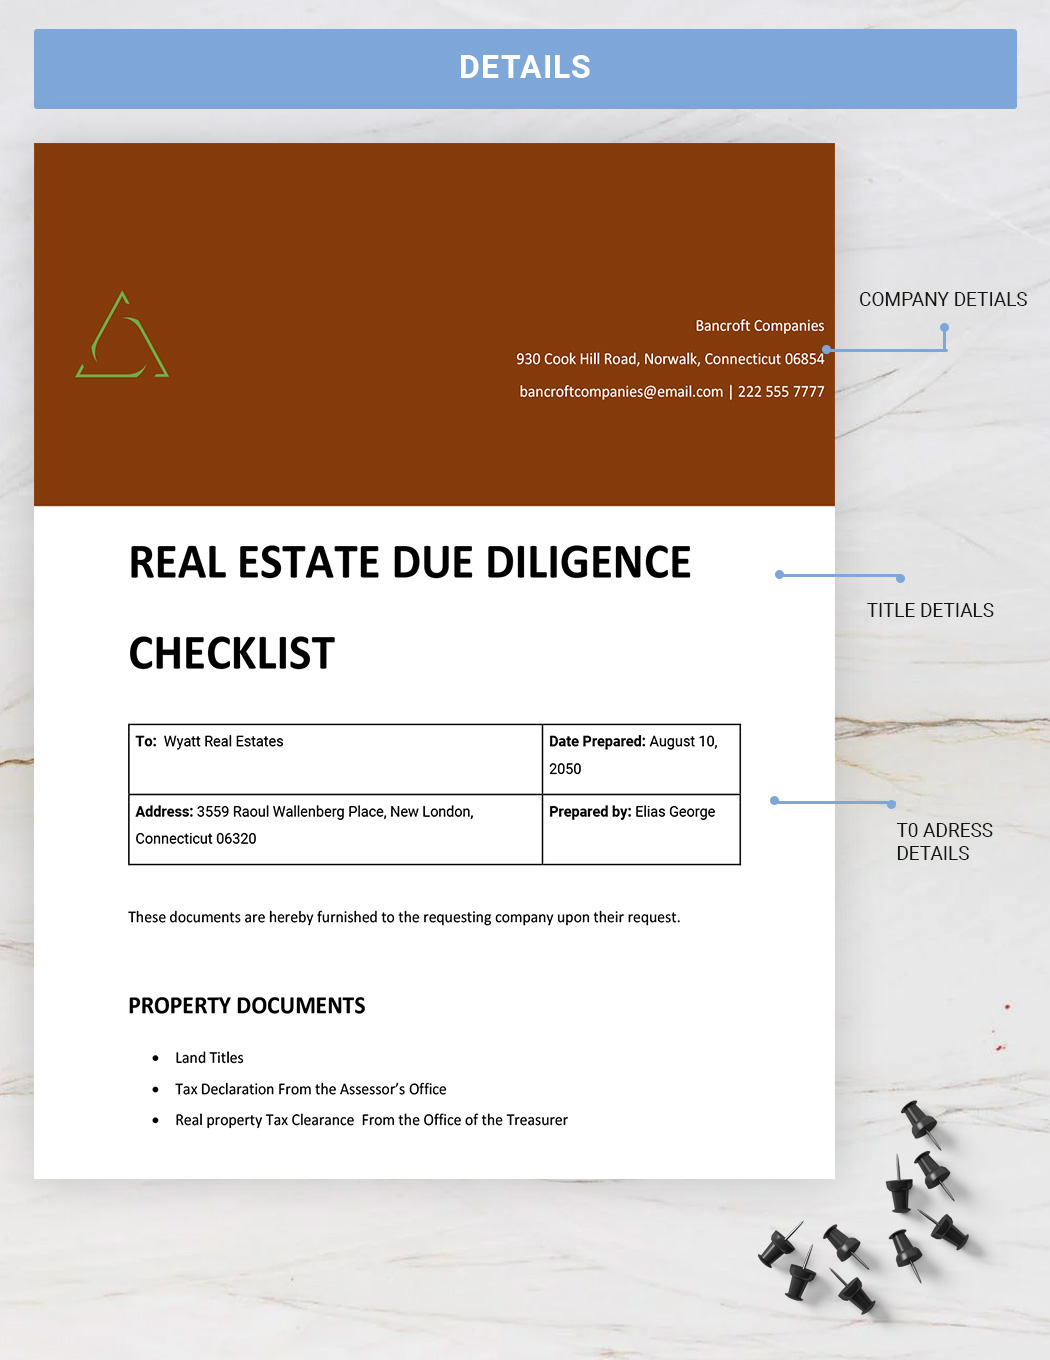 Real Estate Due Diligence Checklist 